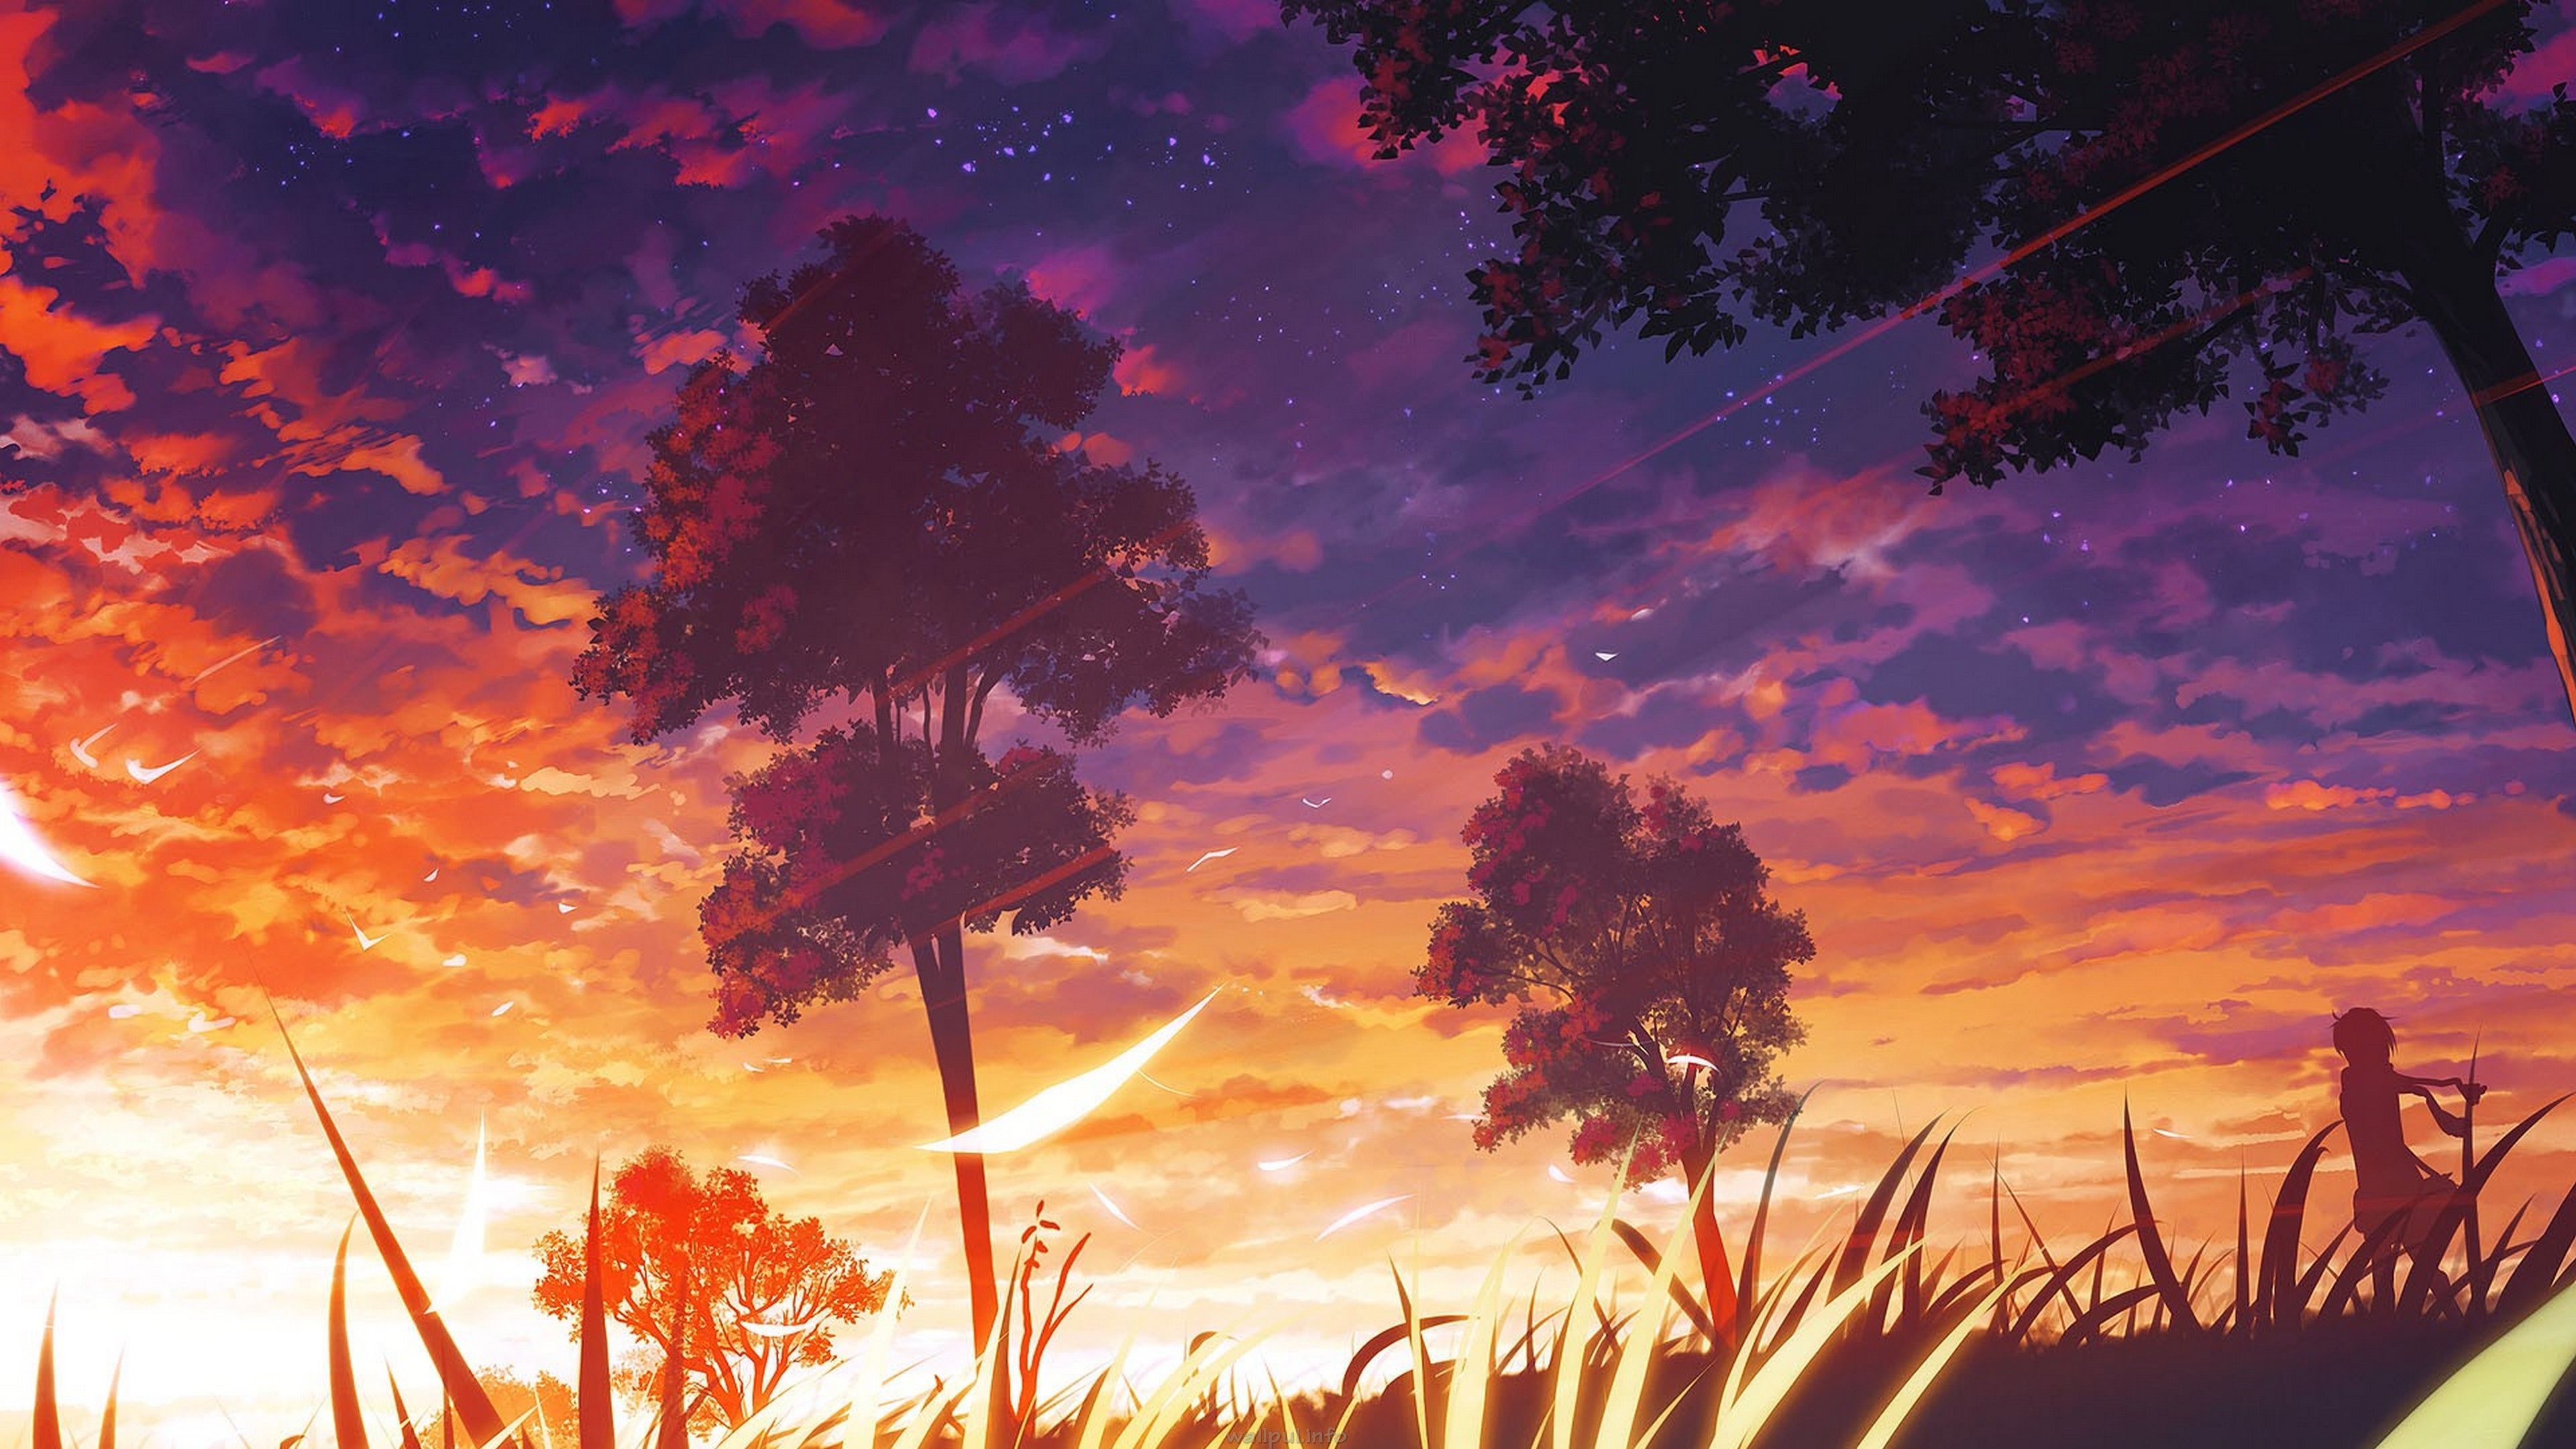 4k Anime Wallpaper 4. Aslania.com. Anime scenery, Scenery wallpaper, Anime scenery wallpaper